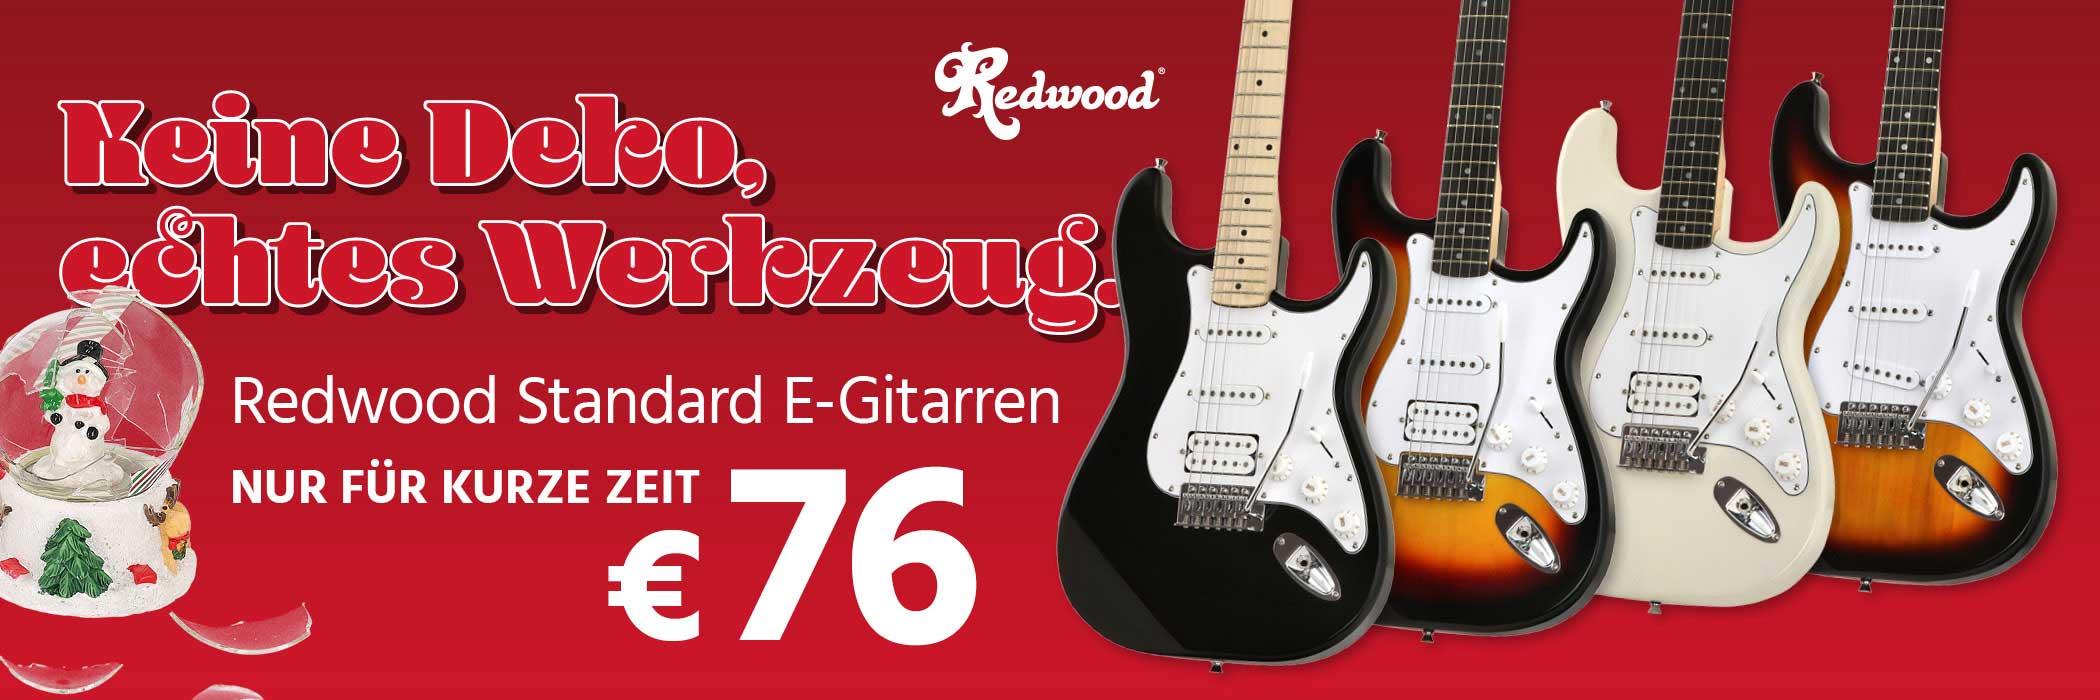 Banner für Redwood Standard E-Gitarren